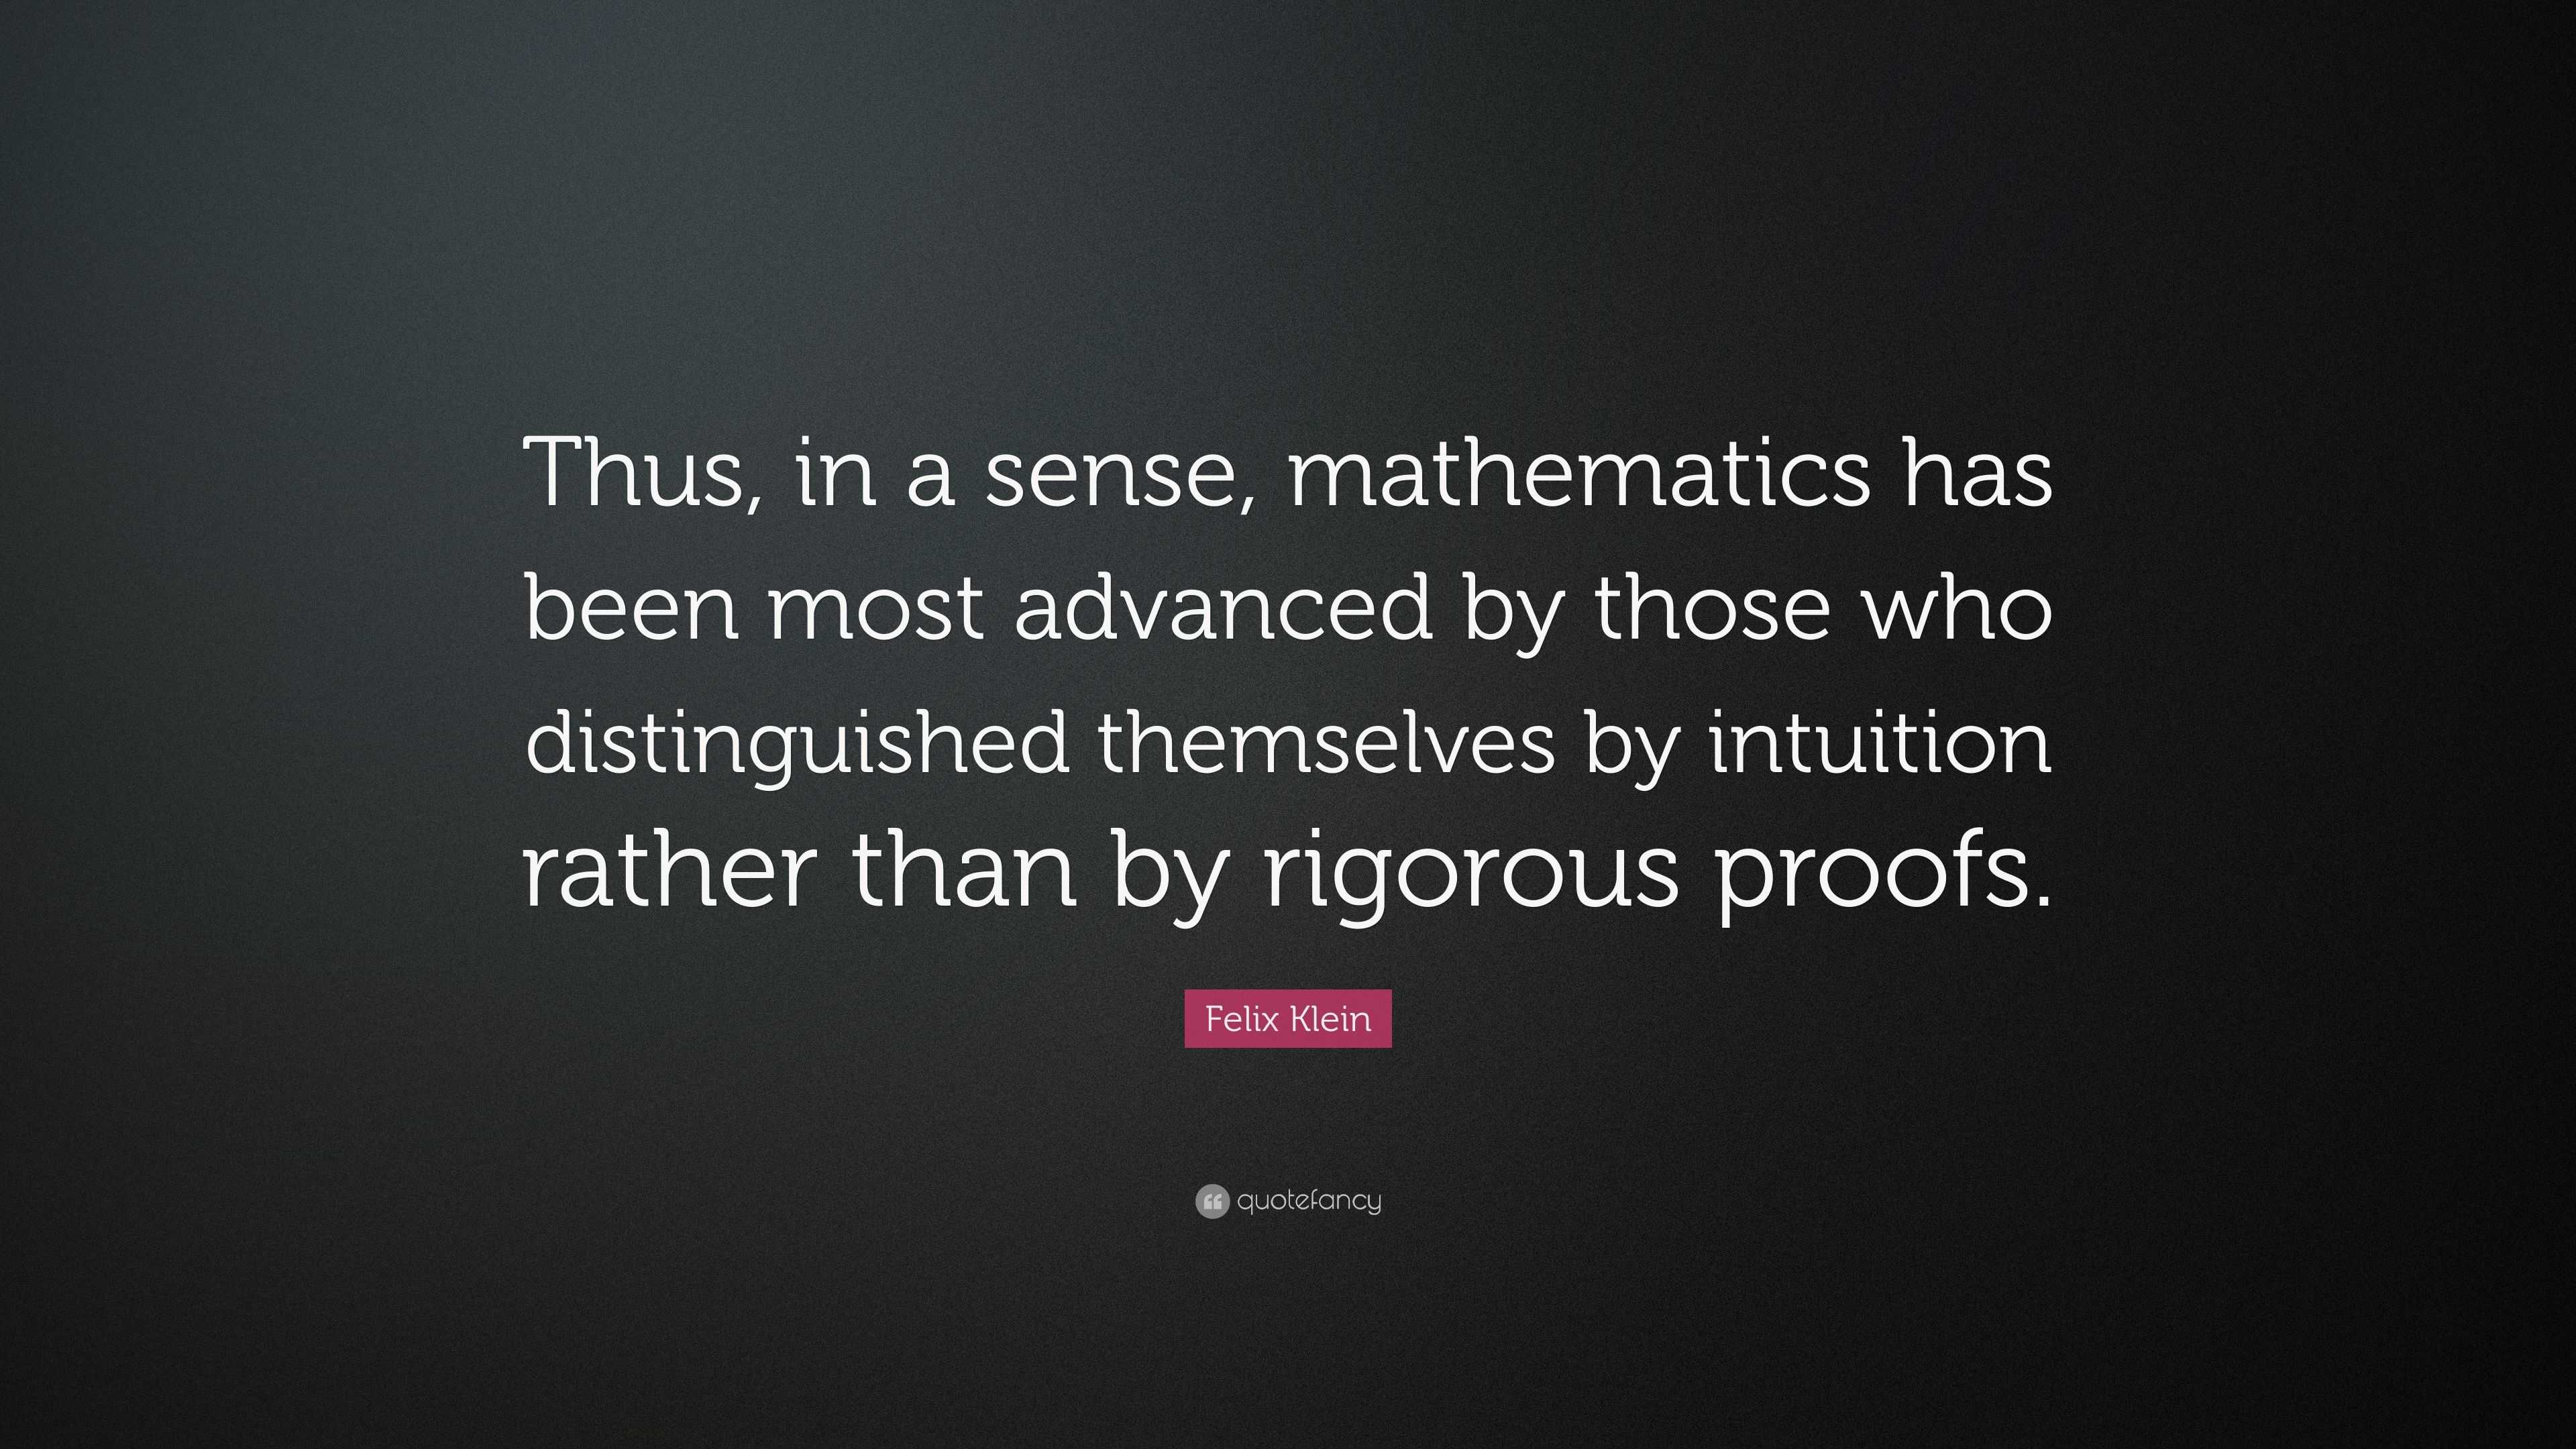 Felix Klein Quote: “Thus, in a sense, mathematics has been most ...